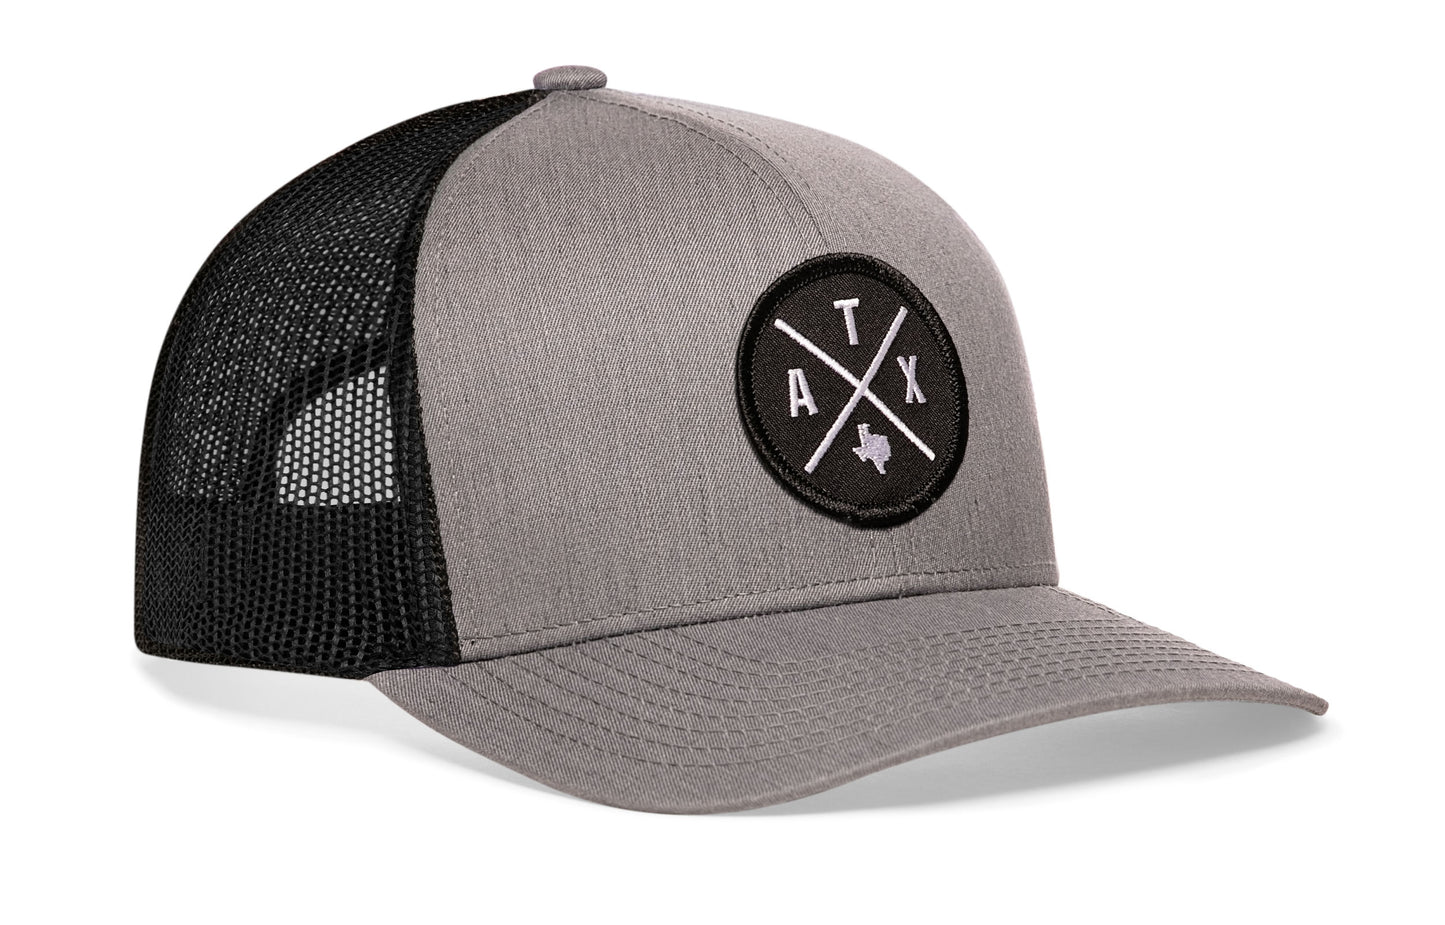 Austin Trucker Hat  |  Gray Black ATX Snapback